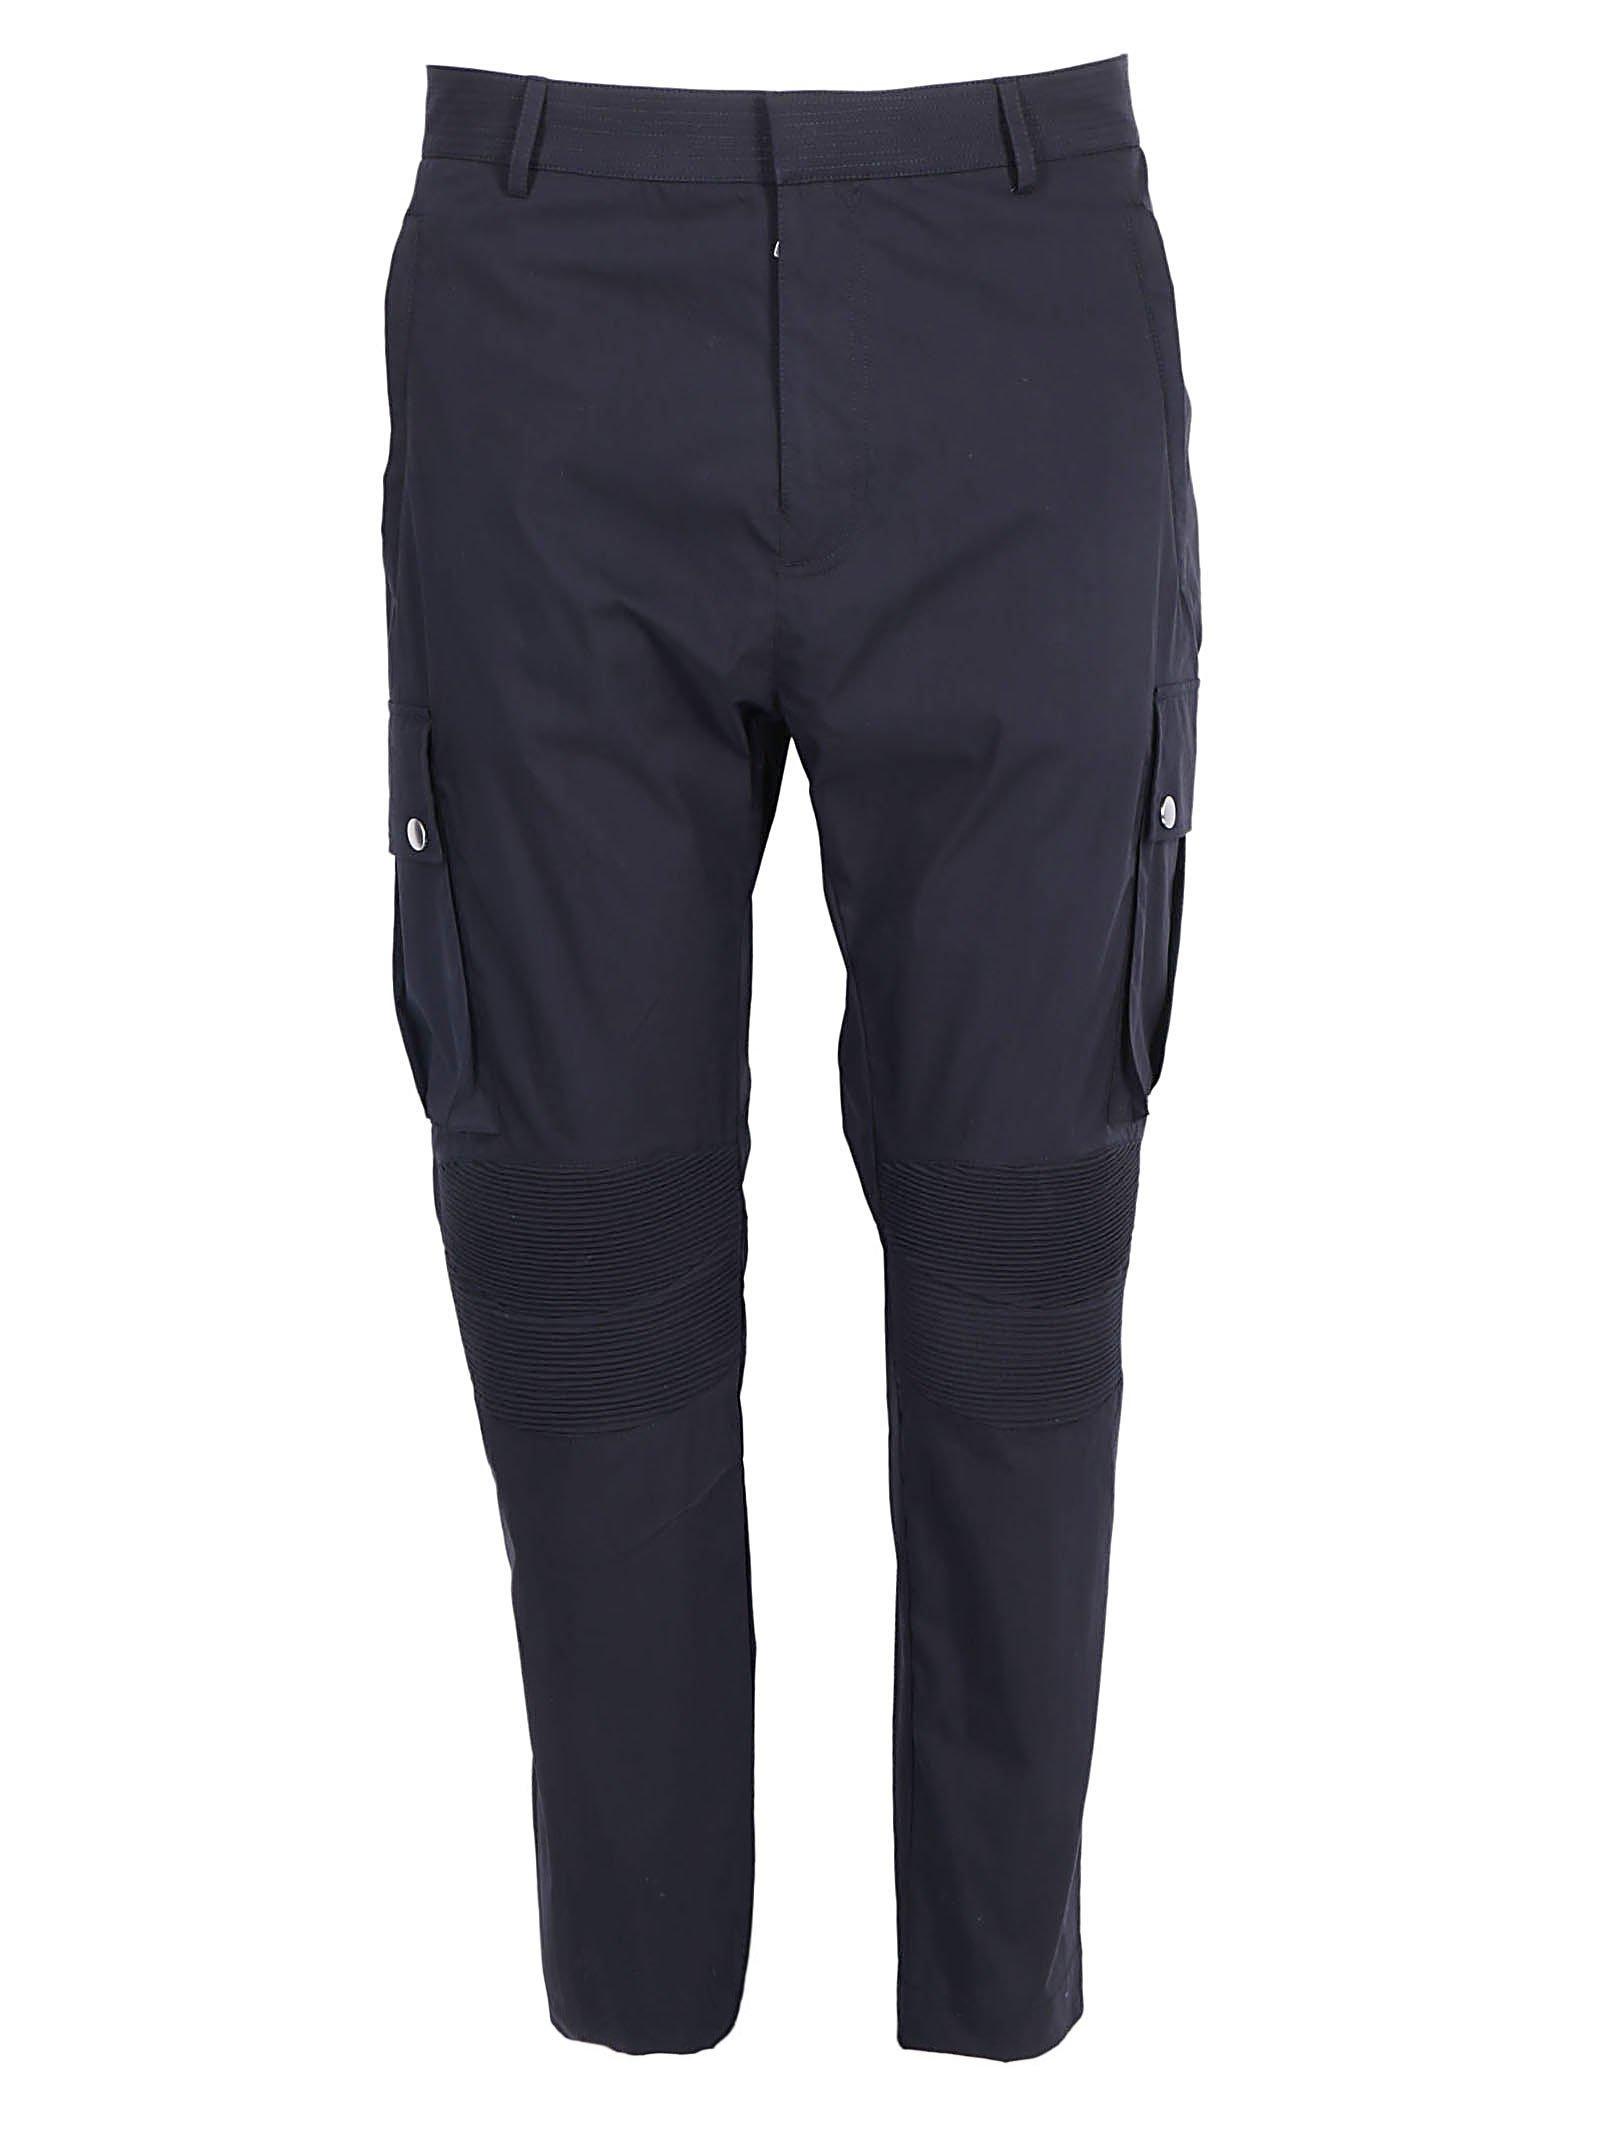 Balmain Side Pocket Cargo Pants in Blue for Men - Lyst